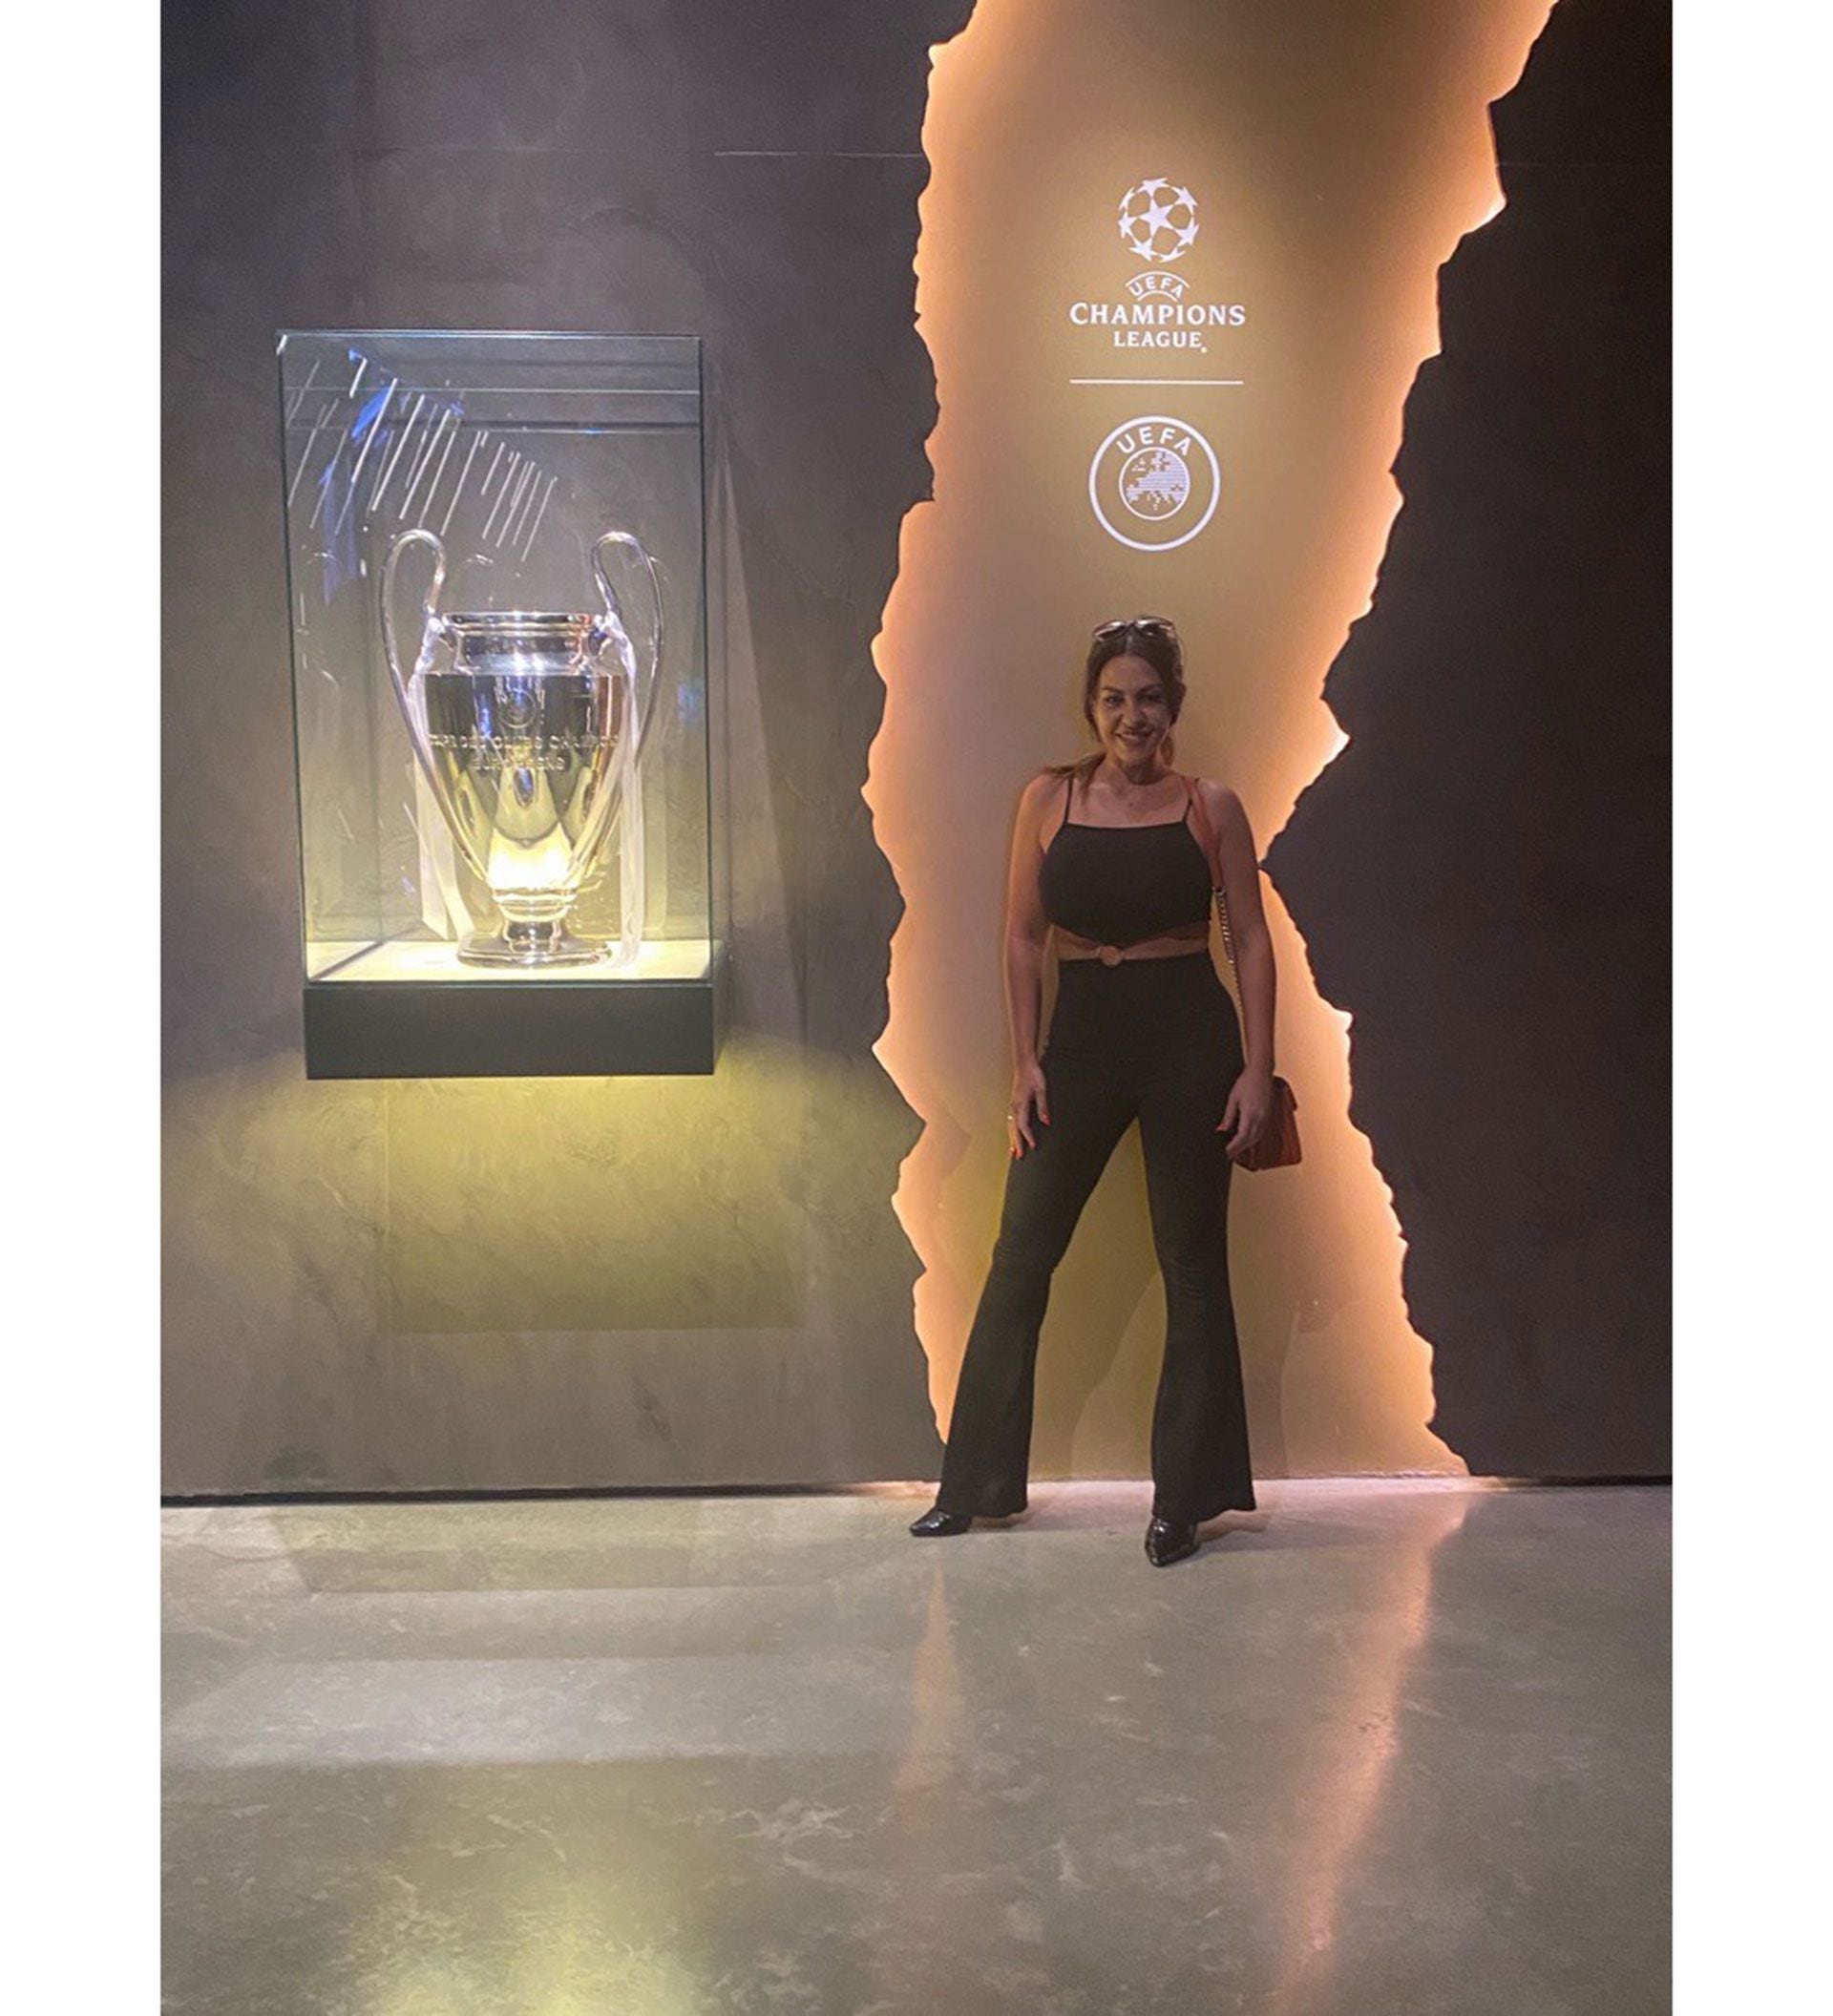 Tamara Alves viaja por el mundo representando futbolistas